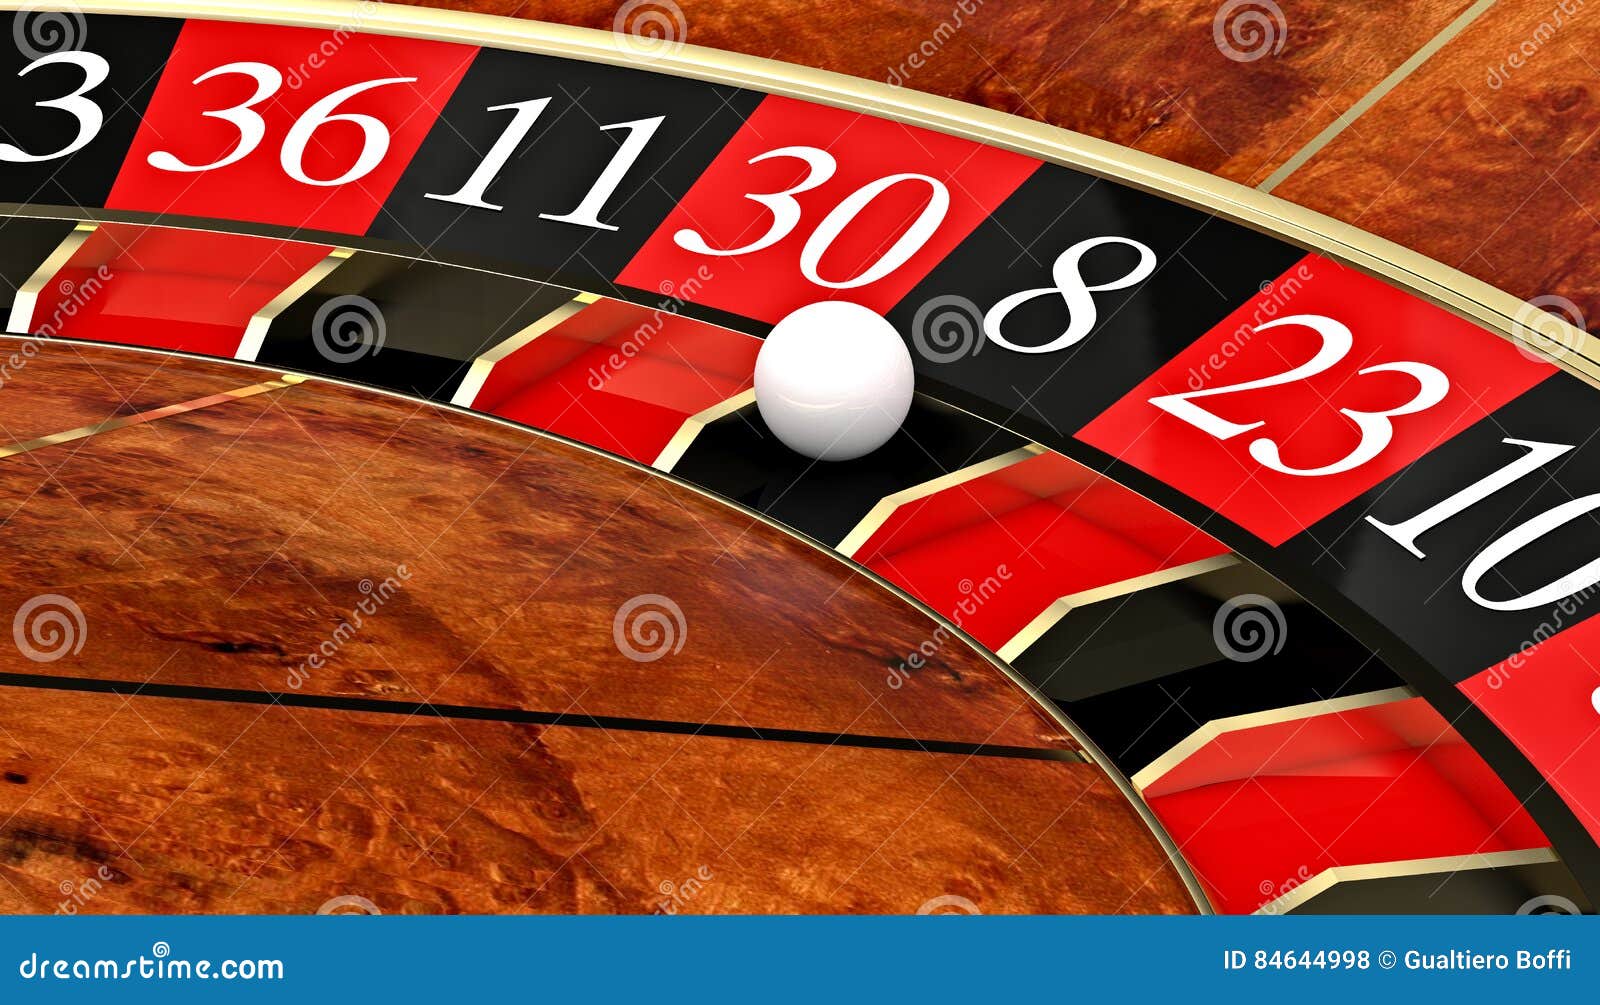 classic casino roulette